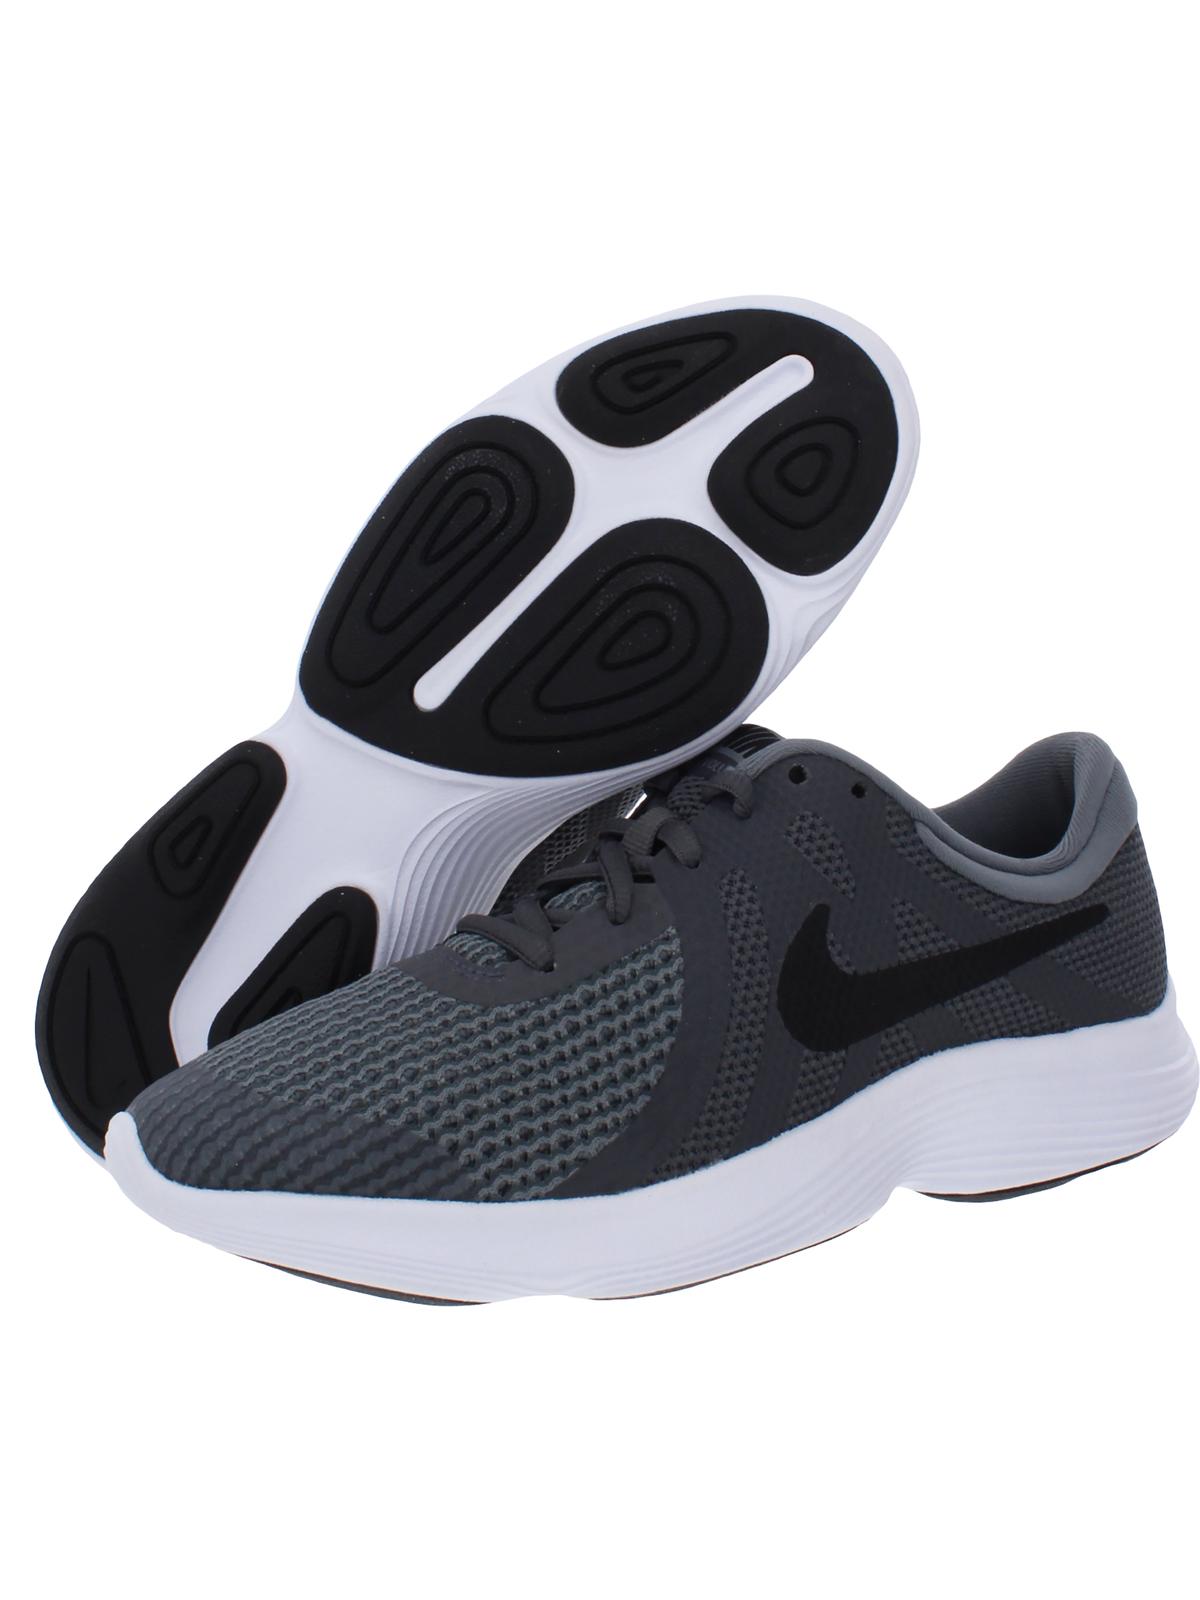 Nike Boys Revolution 4 Knit Fitness Walking Shoes Gray 5 Medium (D) Big Kid - image 2 of 2